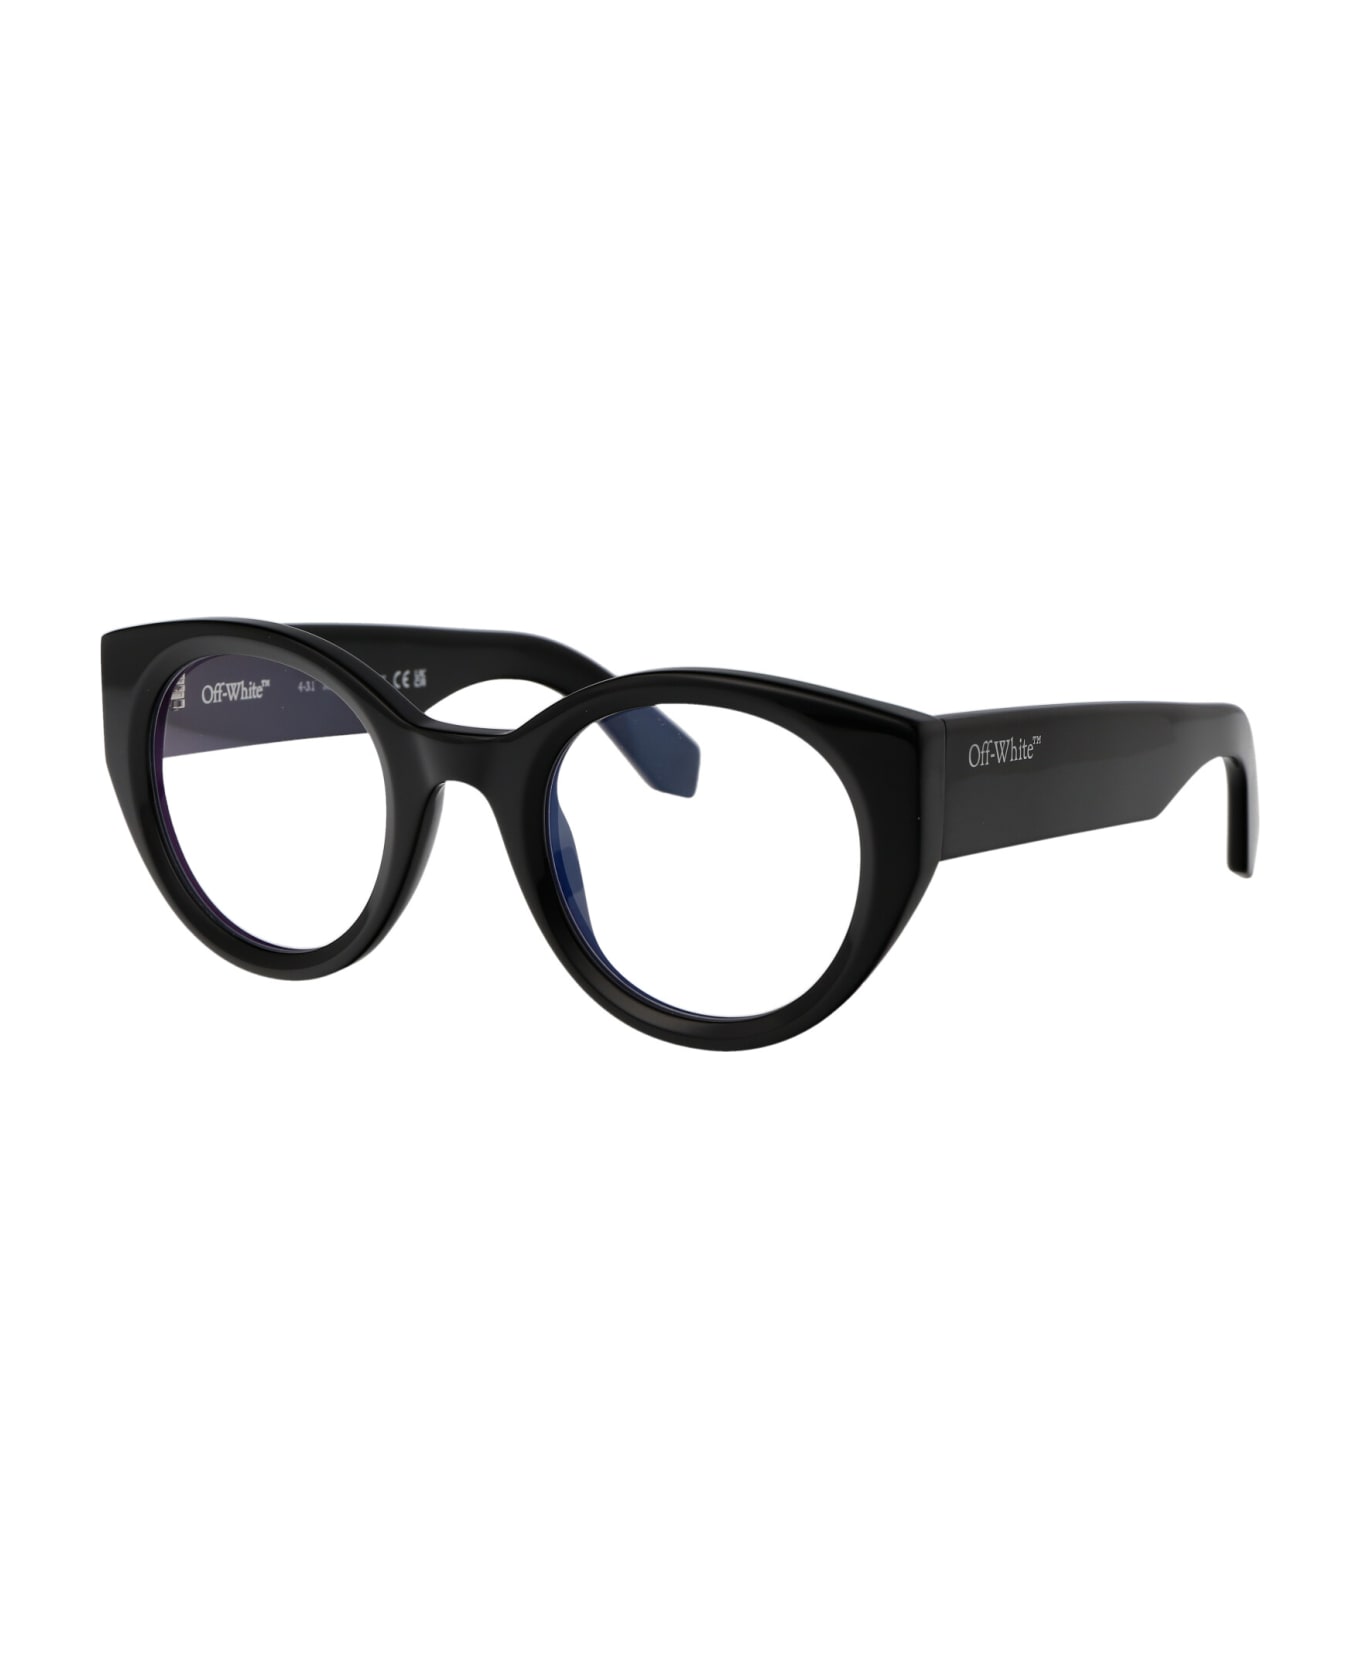 Off-White Optical Style 41 Glasses - 1000 BLACK